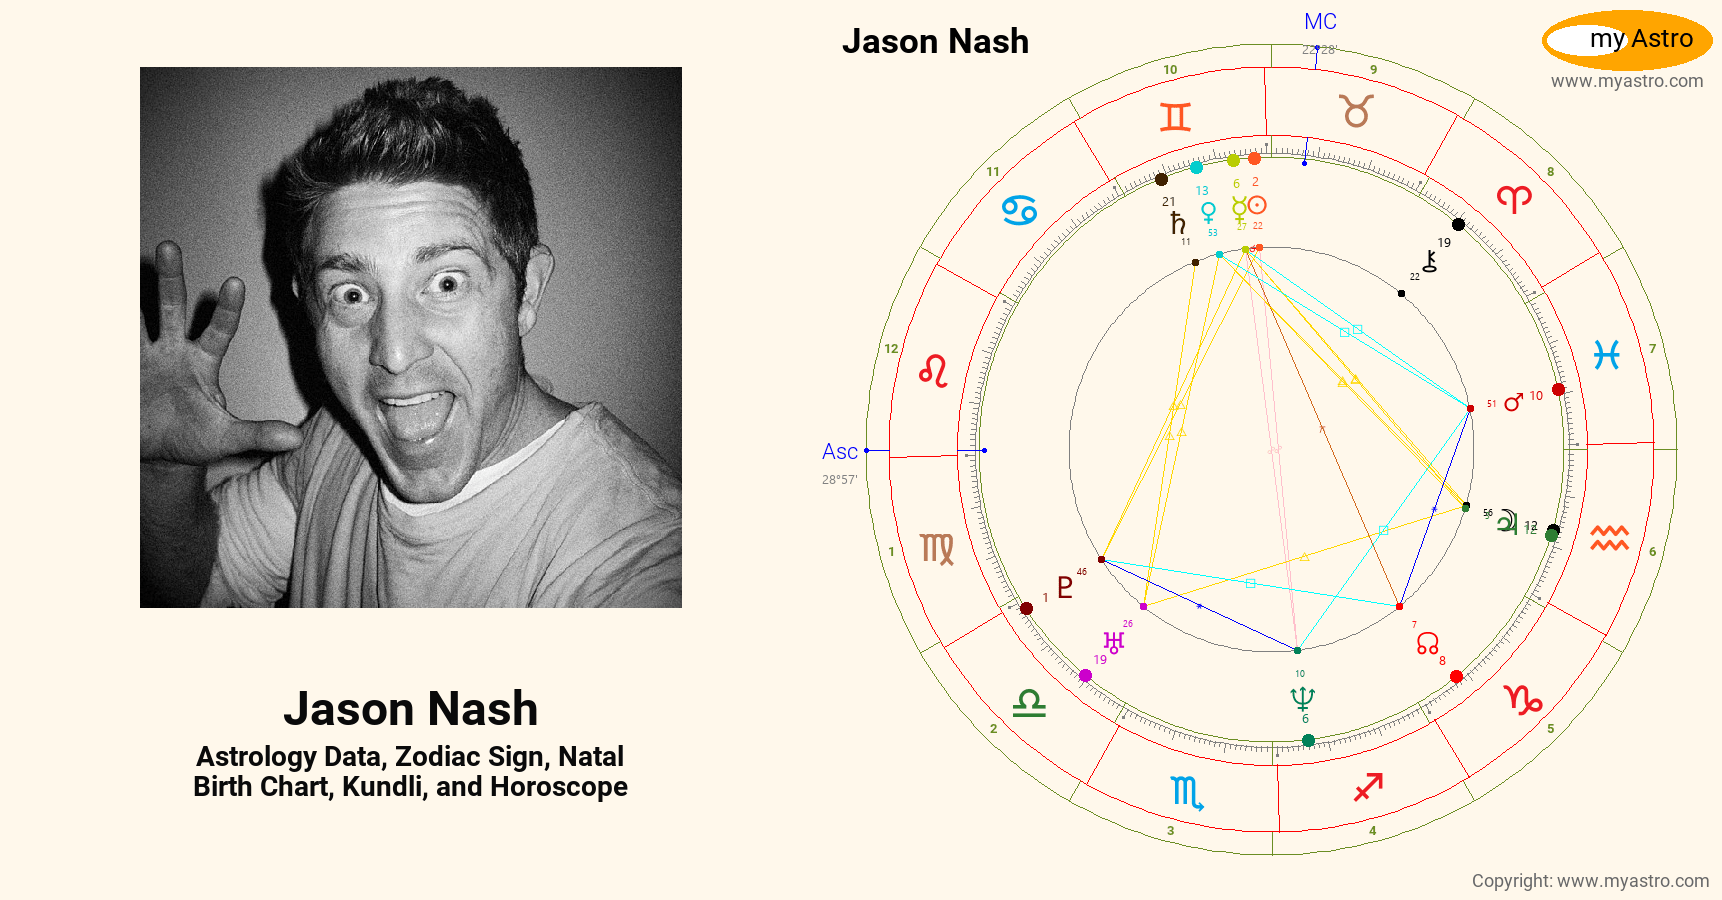 Jason Nash’s natal birth chart, kundli, horoscope, astrology forecast